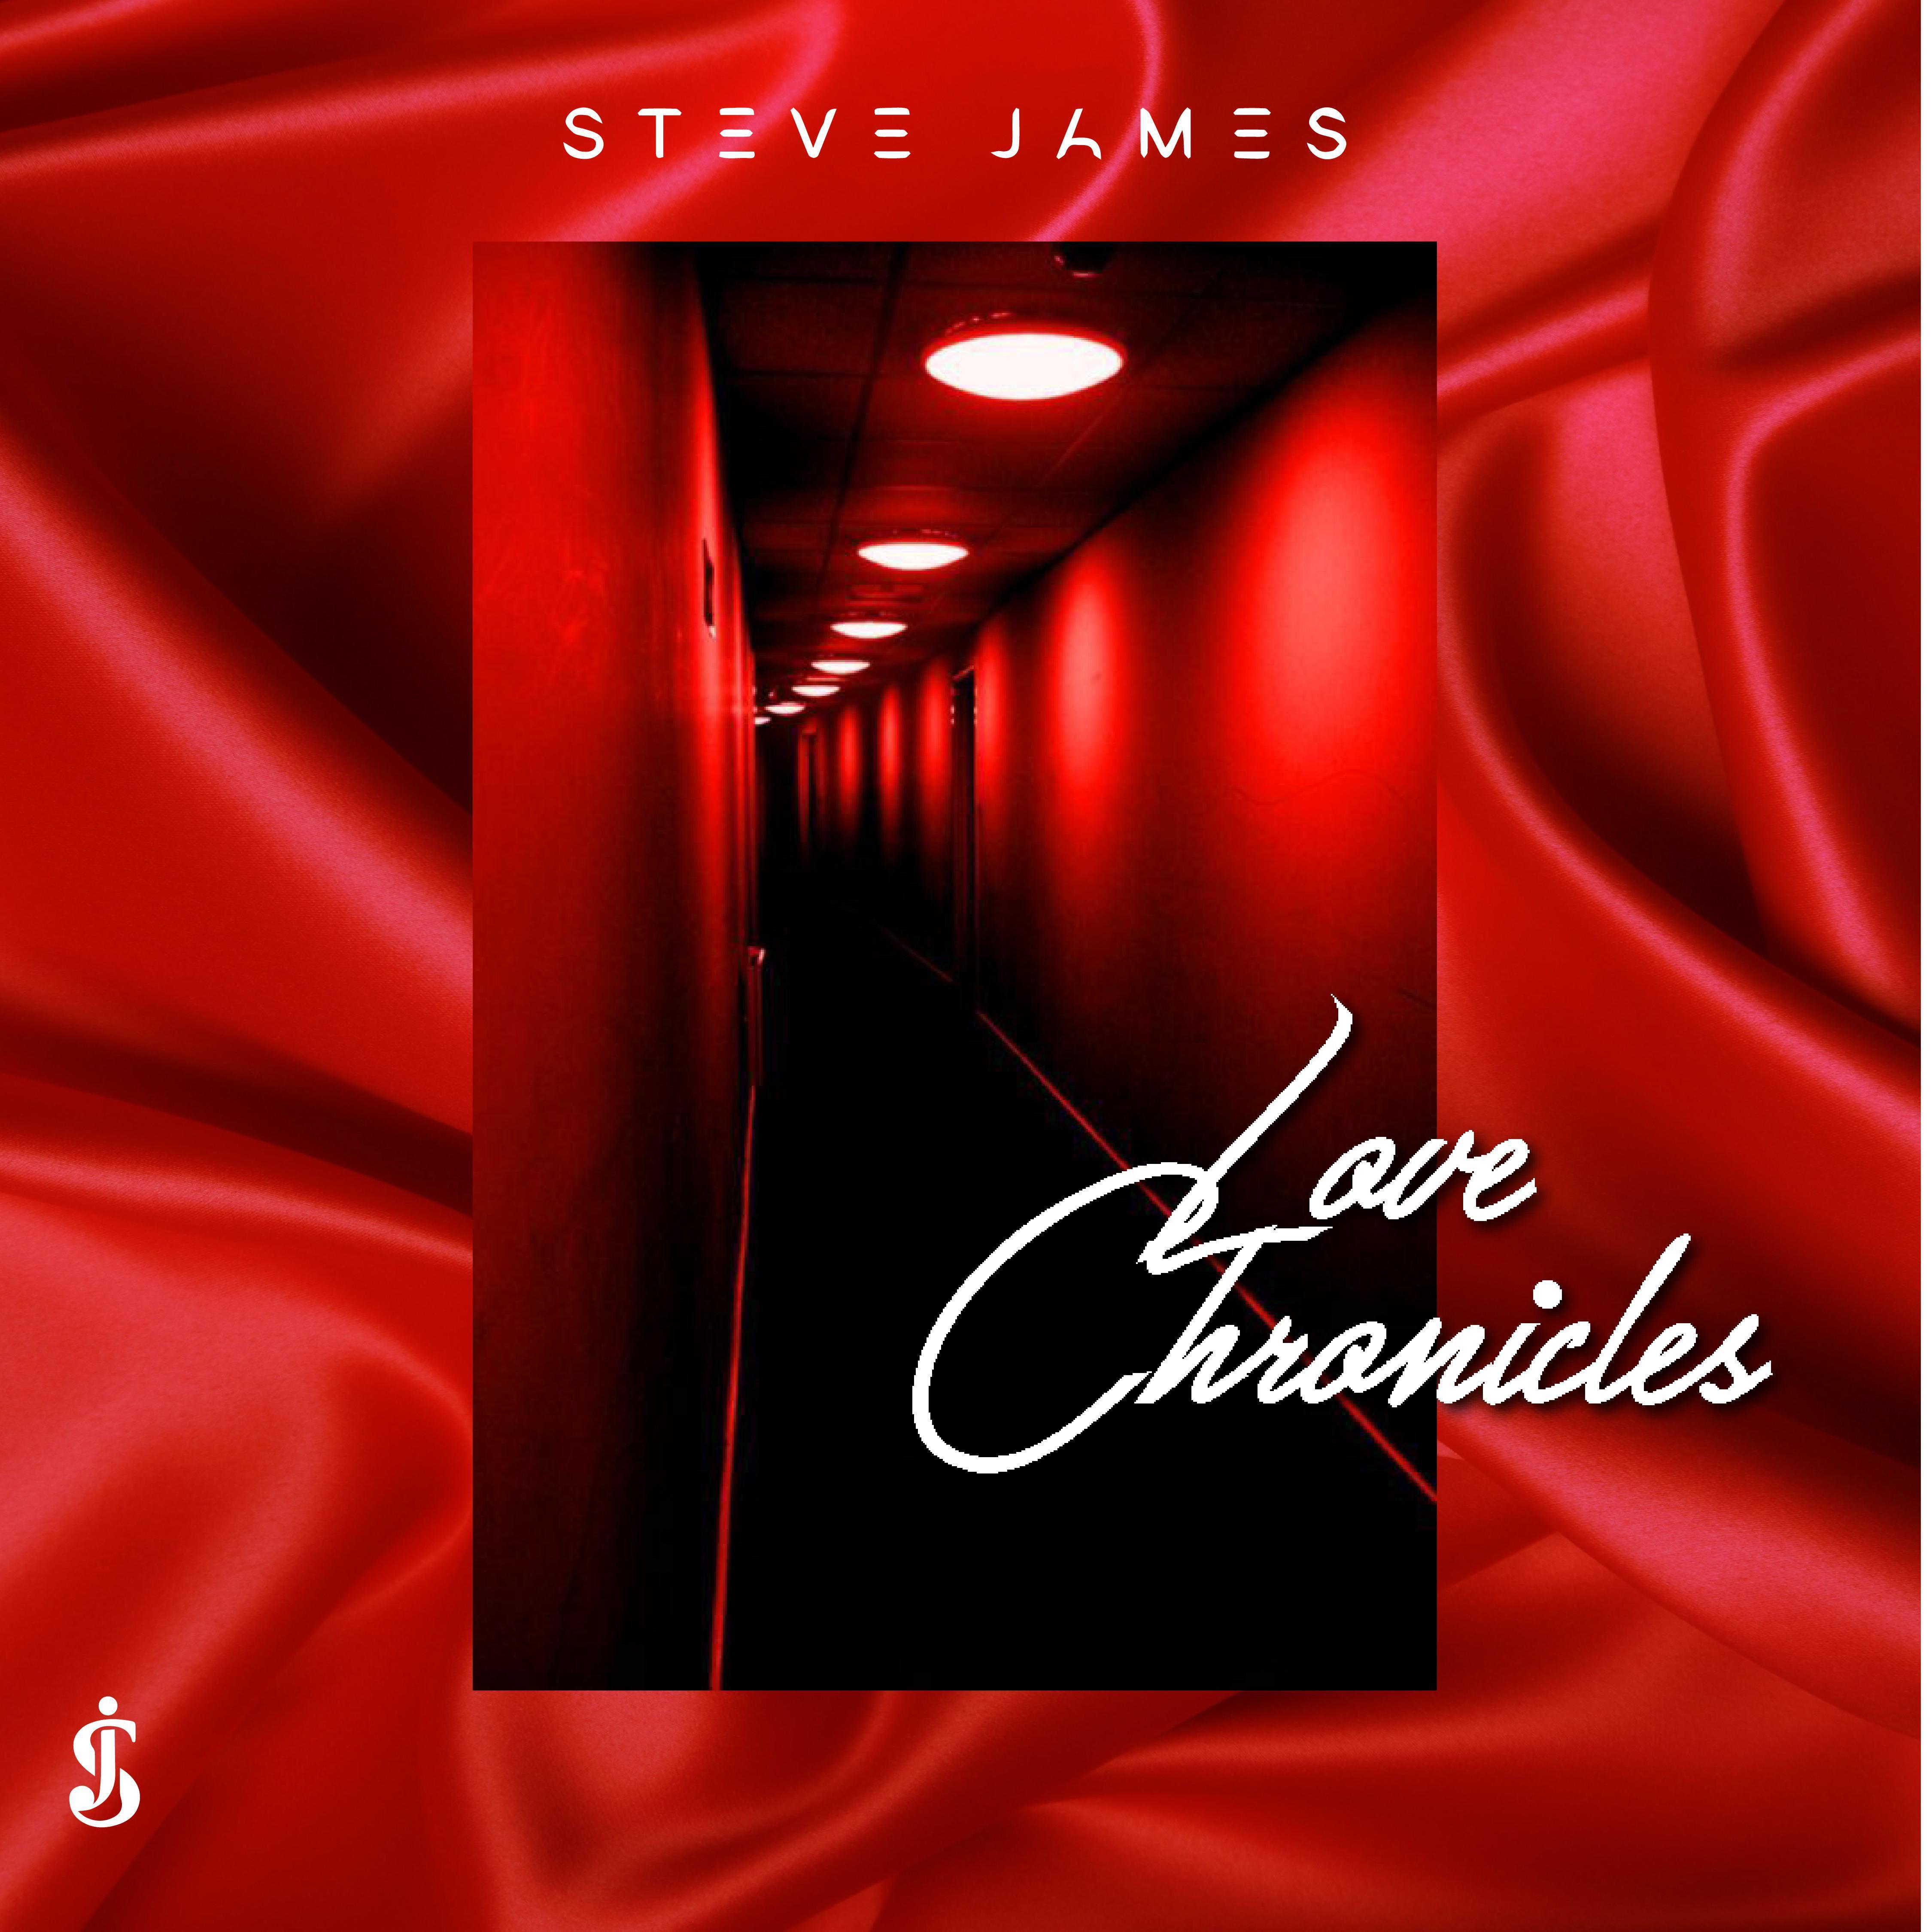 Steve James. Steve James певец. Steve James feat. Zhu. James flac